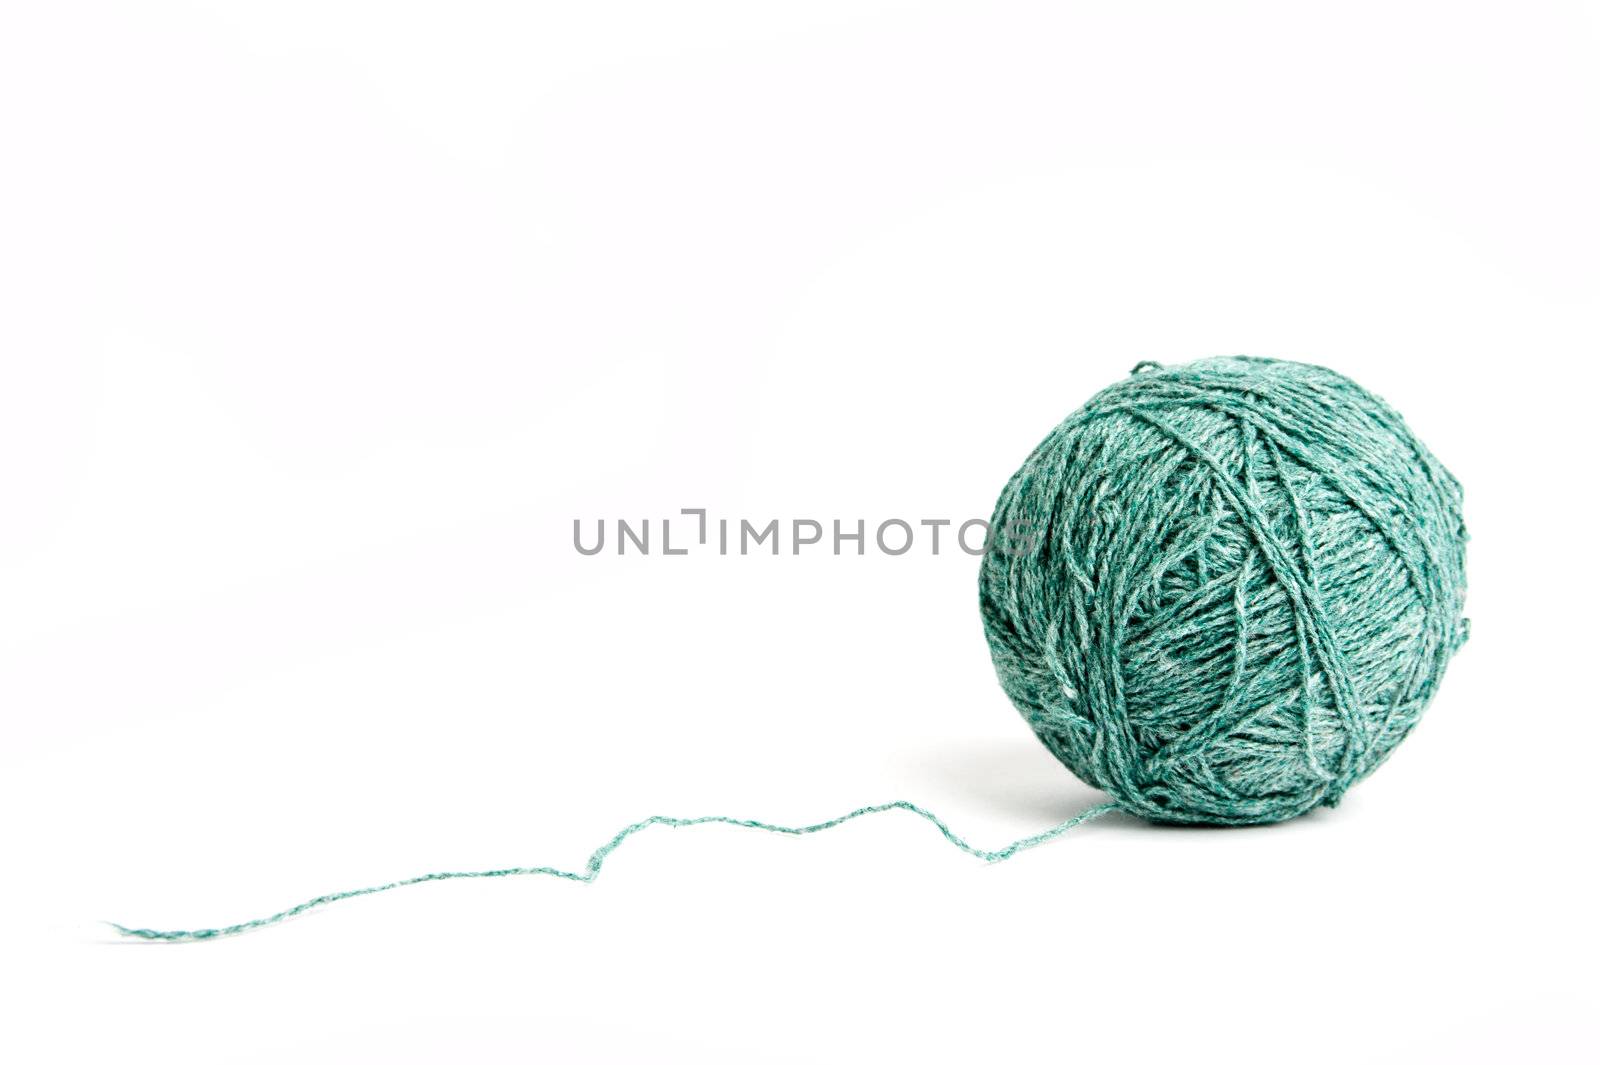 A ball of yarn by velkol